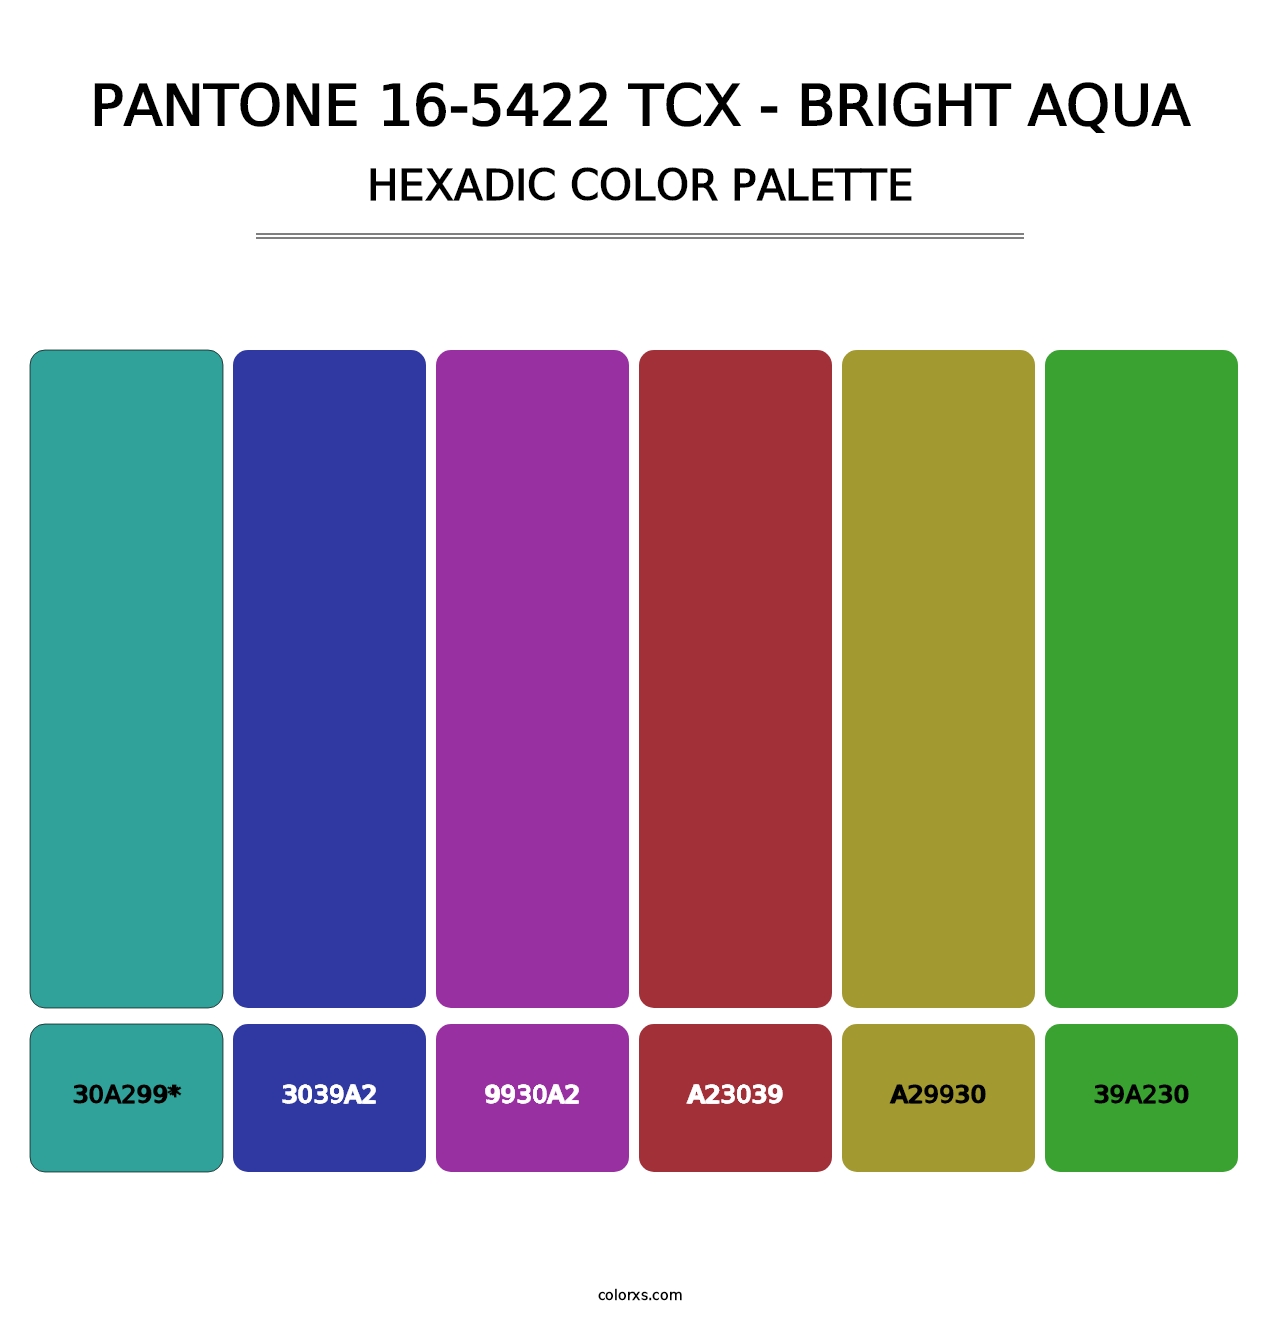 PANTONE 16-5422 TCX - Bright Aqua - Hexadic Color Palette